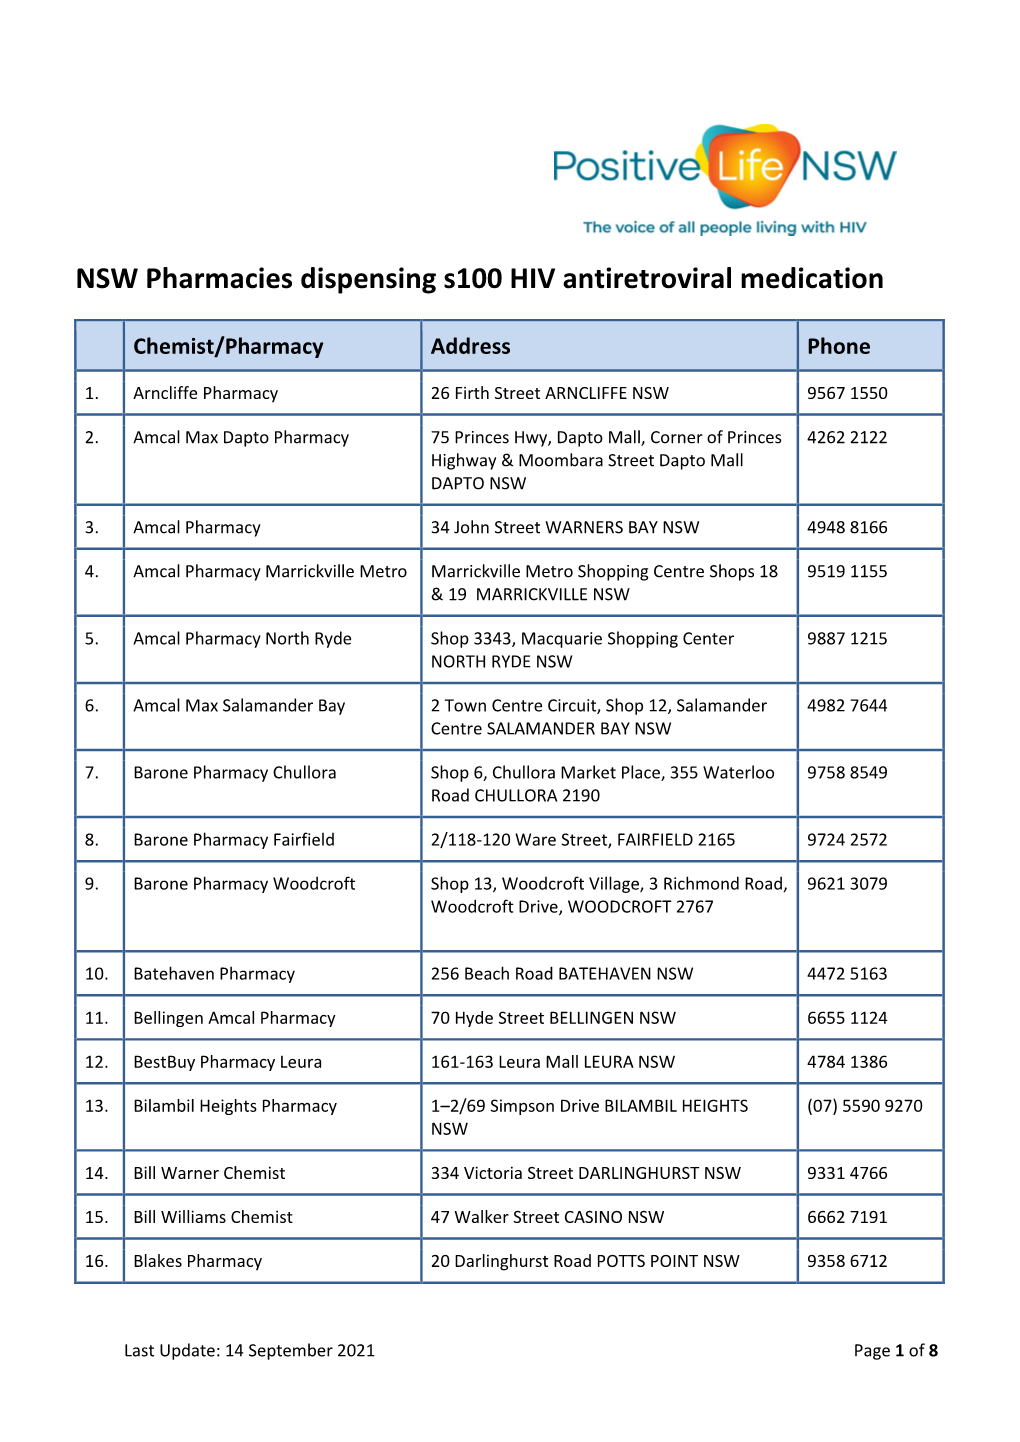 NSW Pharmacies Dispensing S100 HIV Antiretroviral Medication